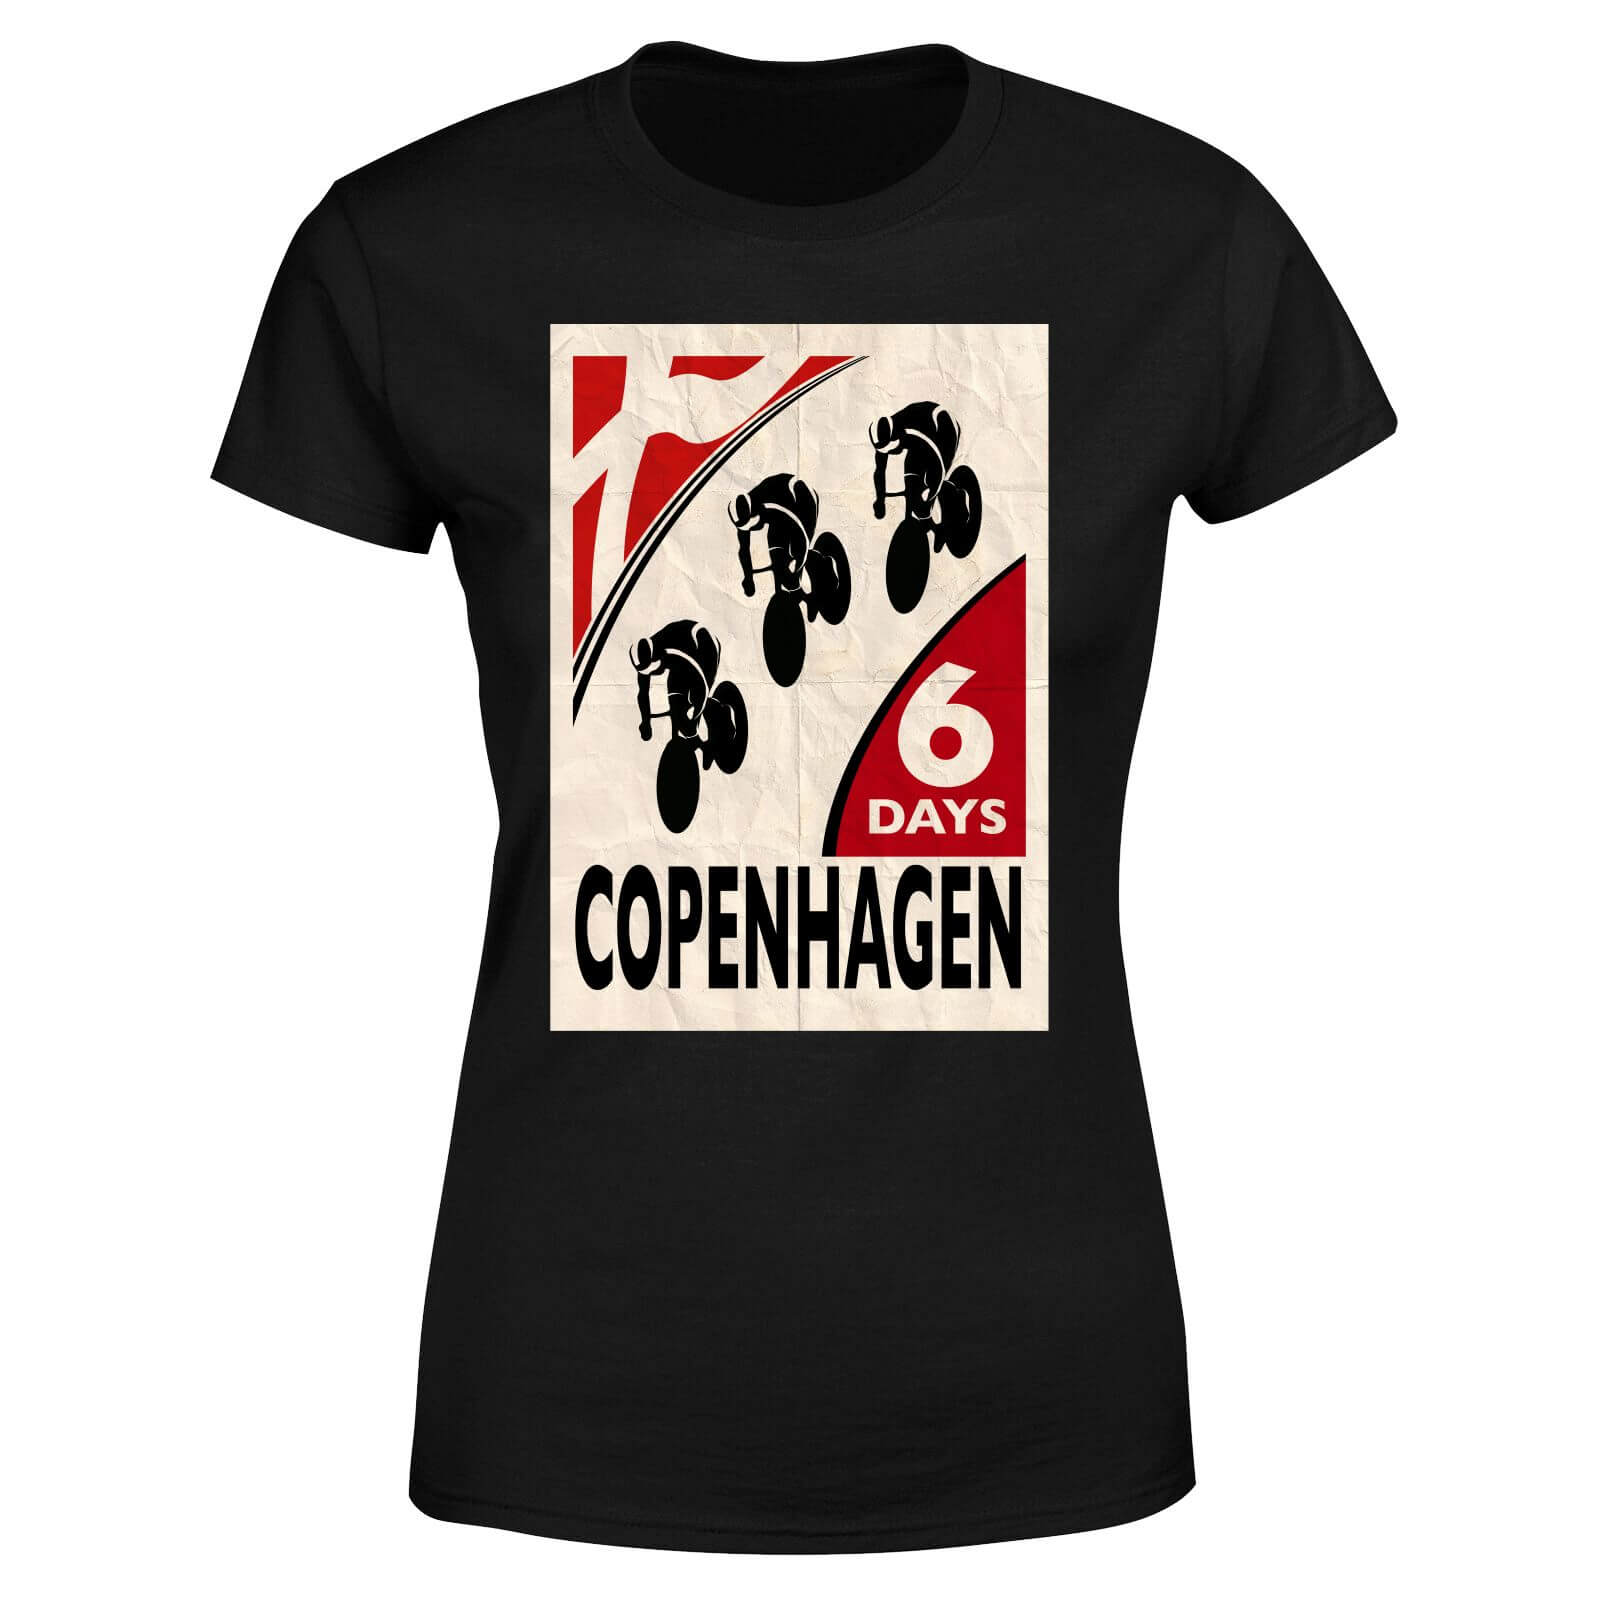 Six Days Copenhagen Women's T-Shirt - Black - XXL - Black